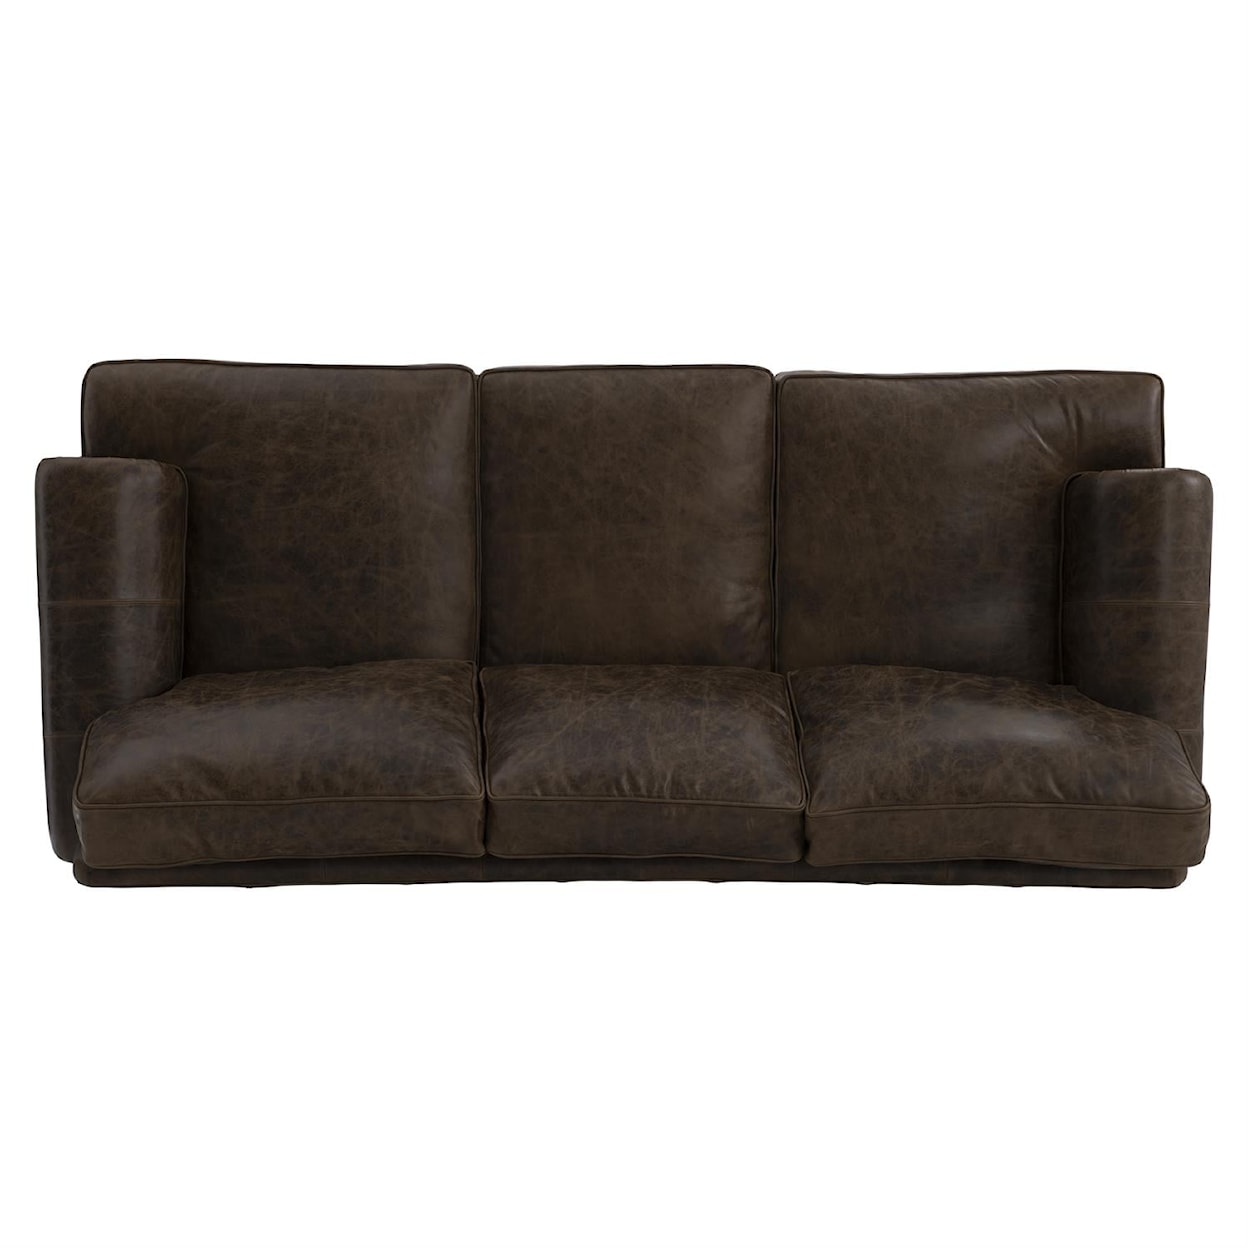 Bernhardt Bernhardt Living Foster Leather Sofa without Pillows